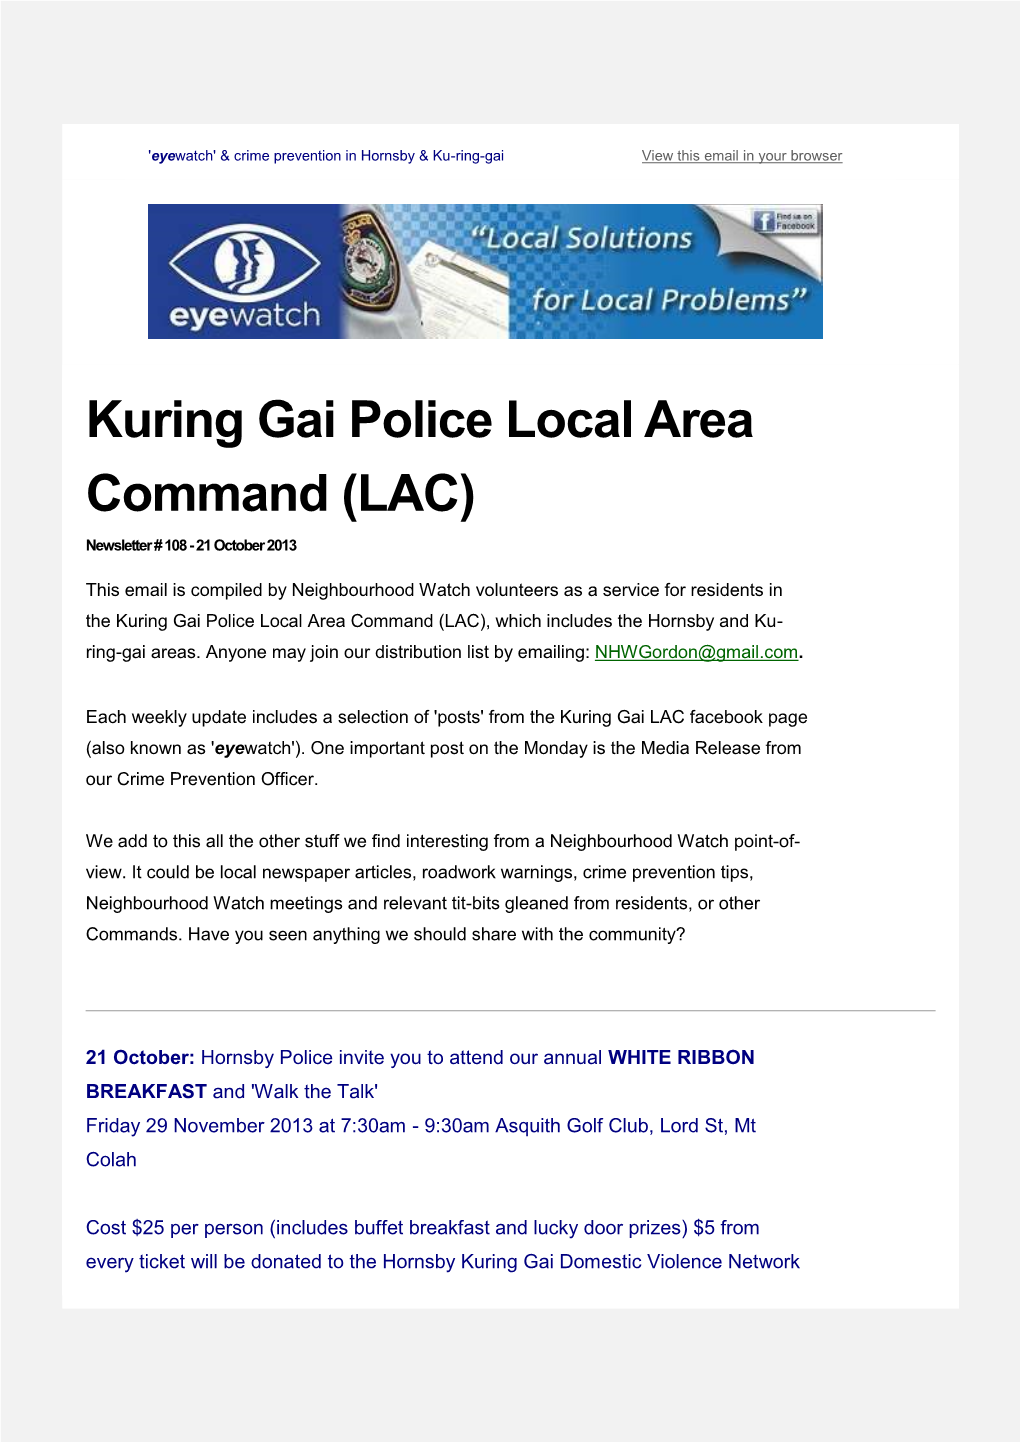 Eyewatch & Crime Prevention in Kuring Gai